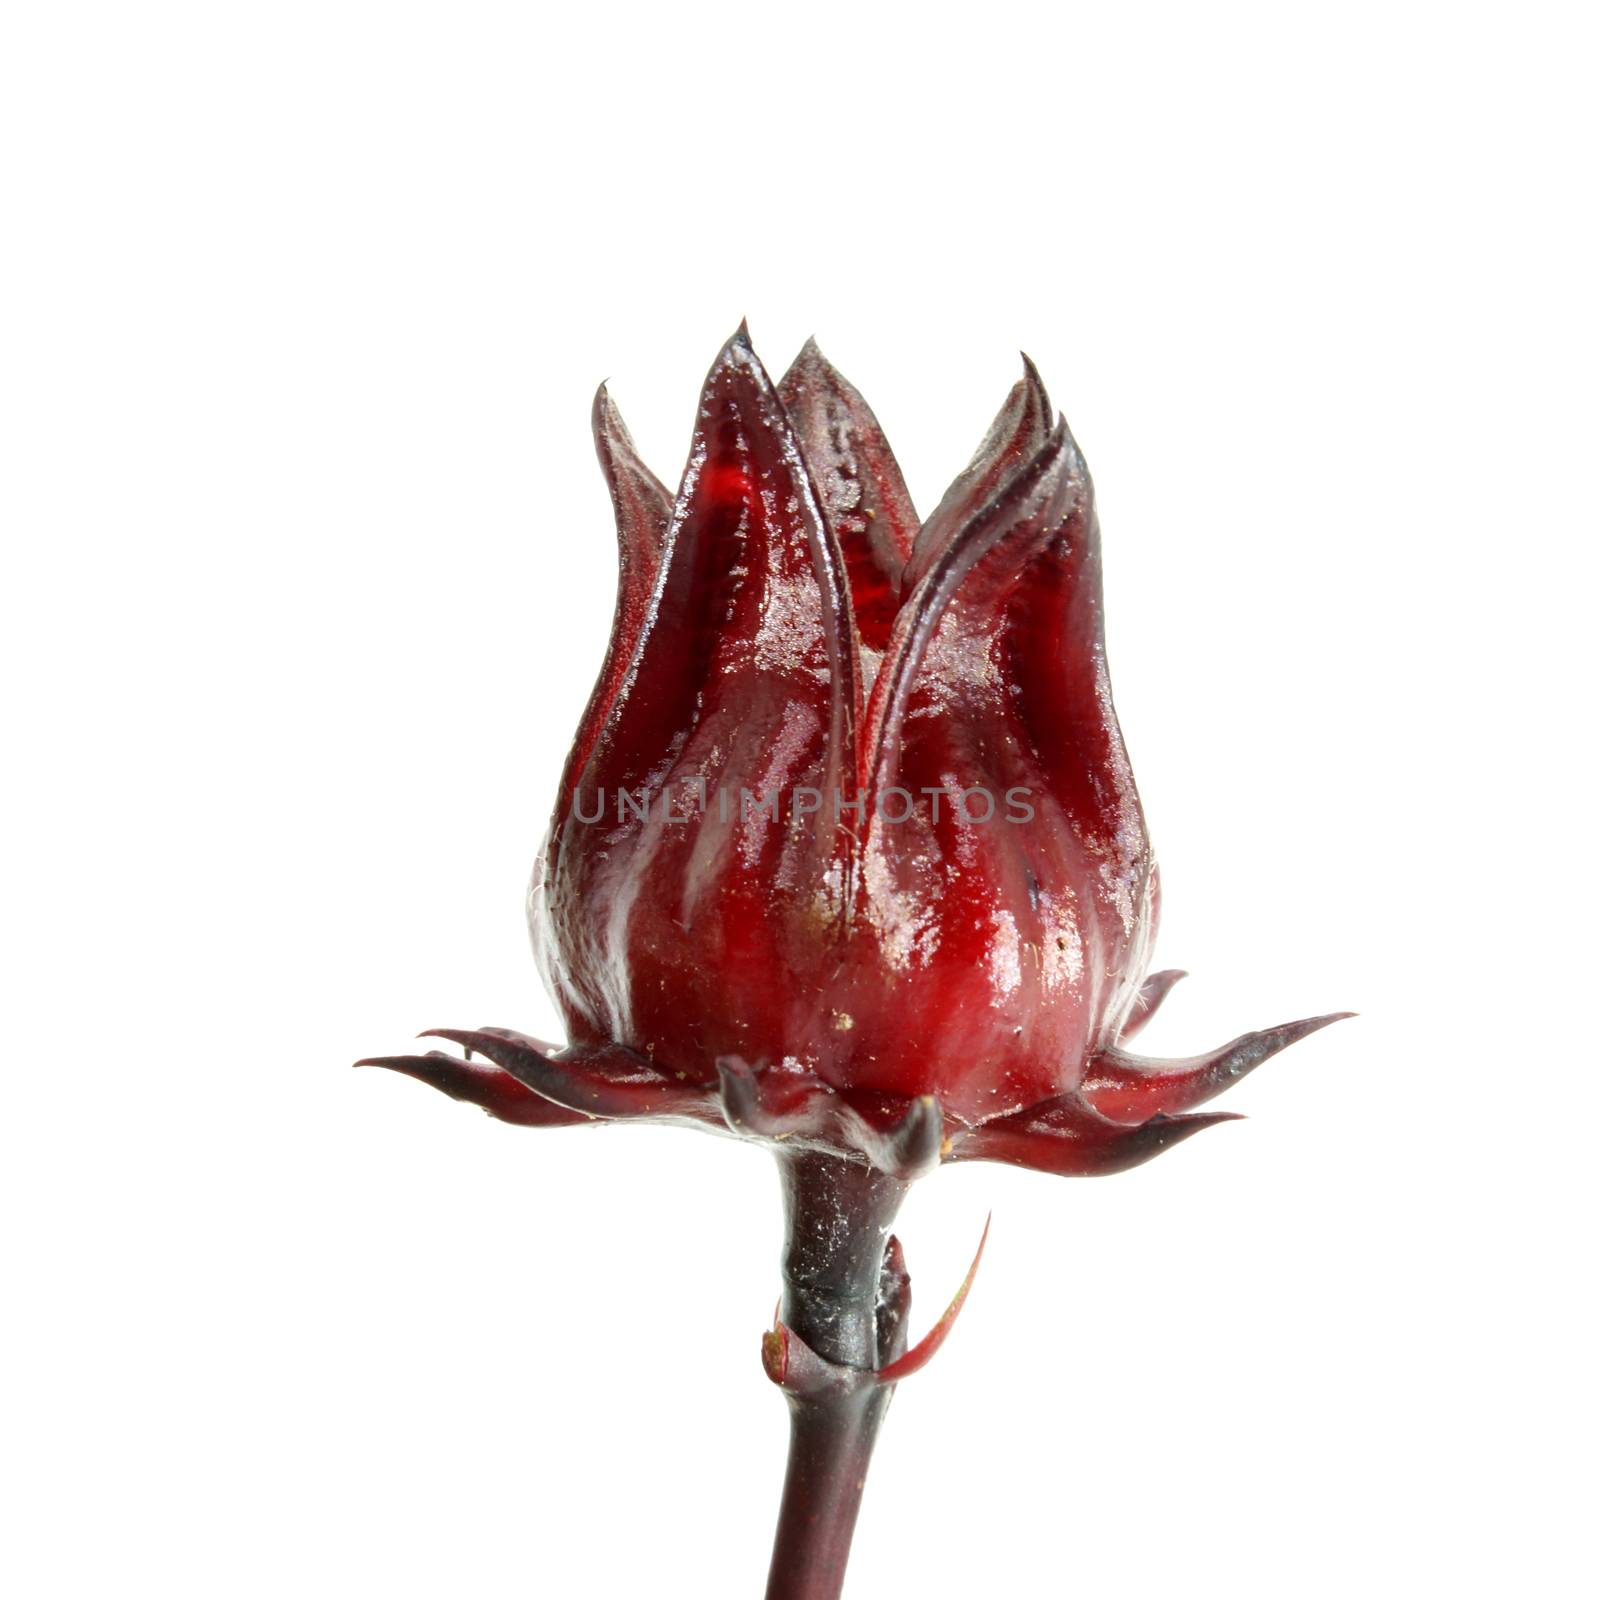 Hibiscus sabdariffa or roselle fruits (Hibiscus sabdariffa L.)